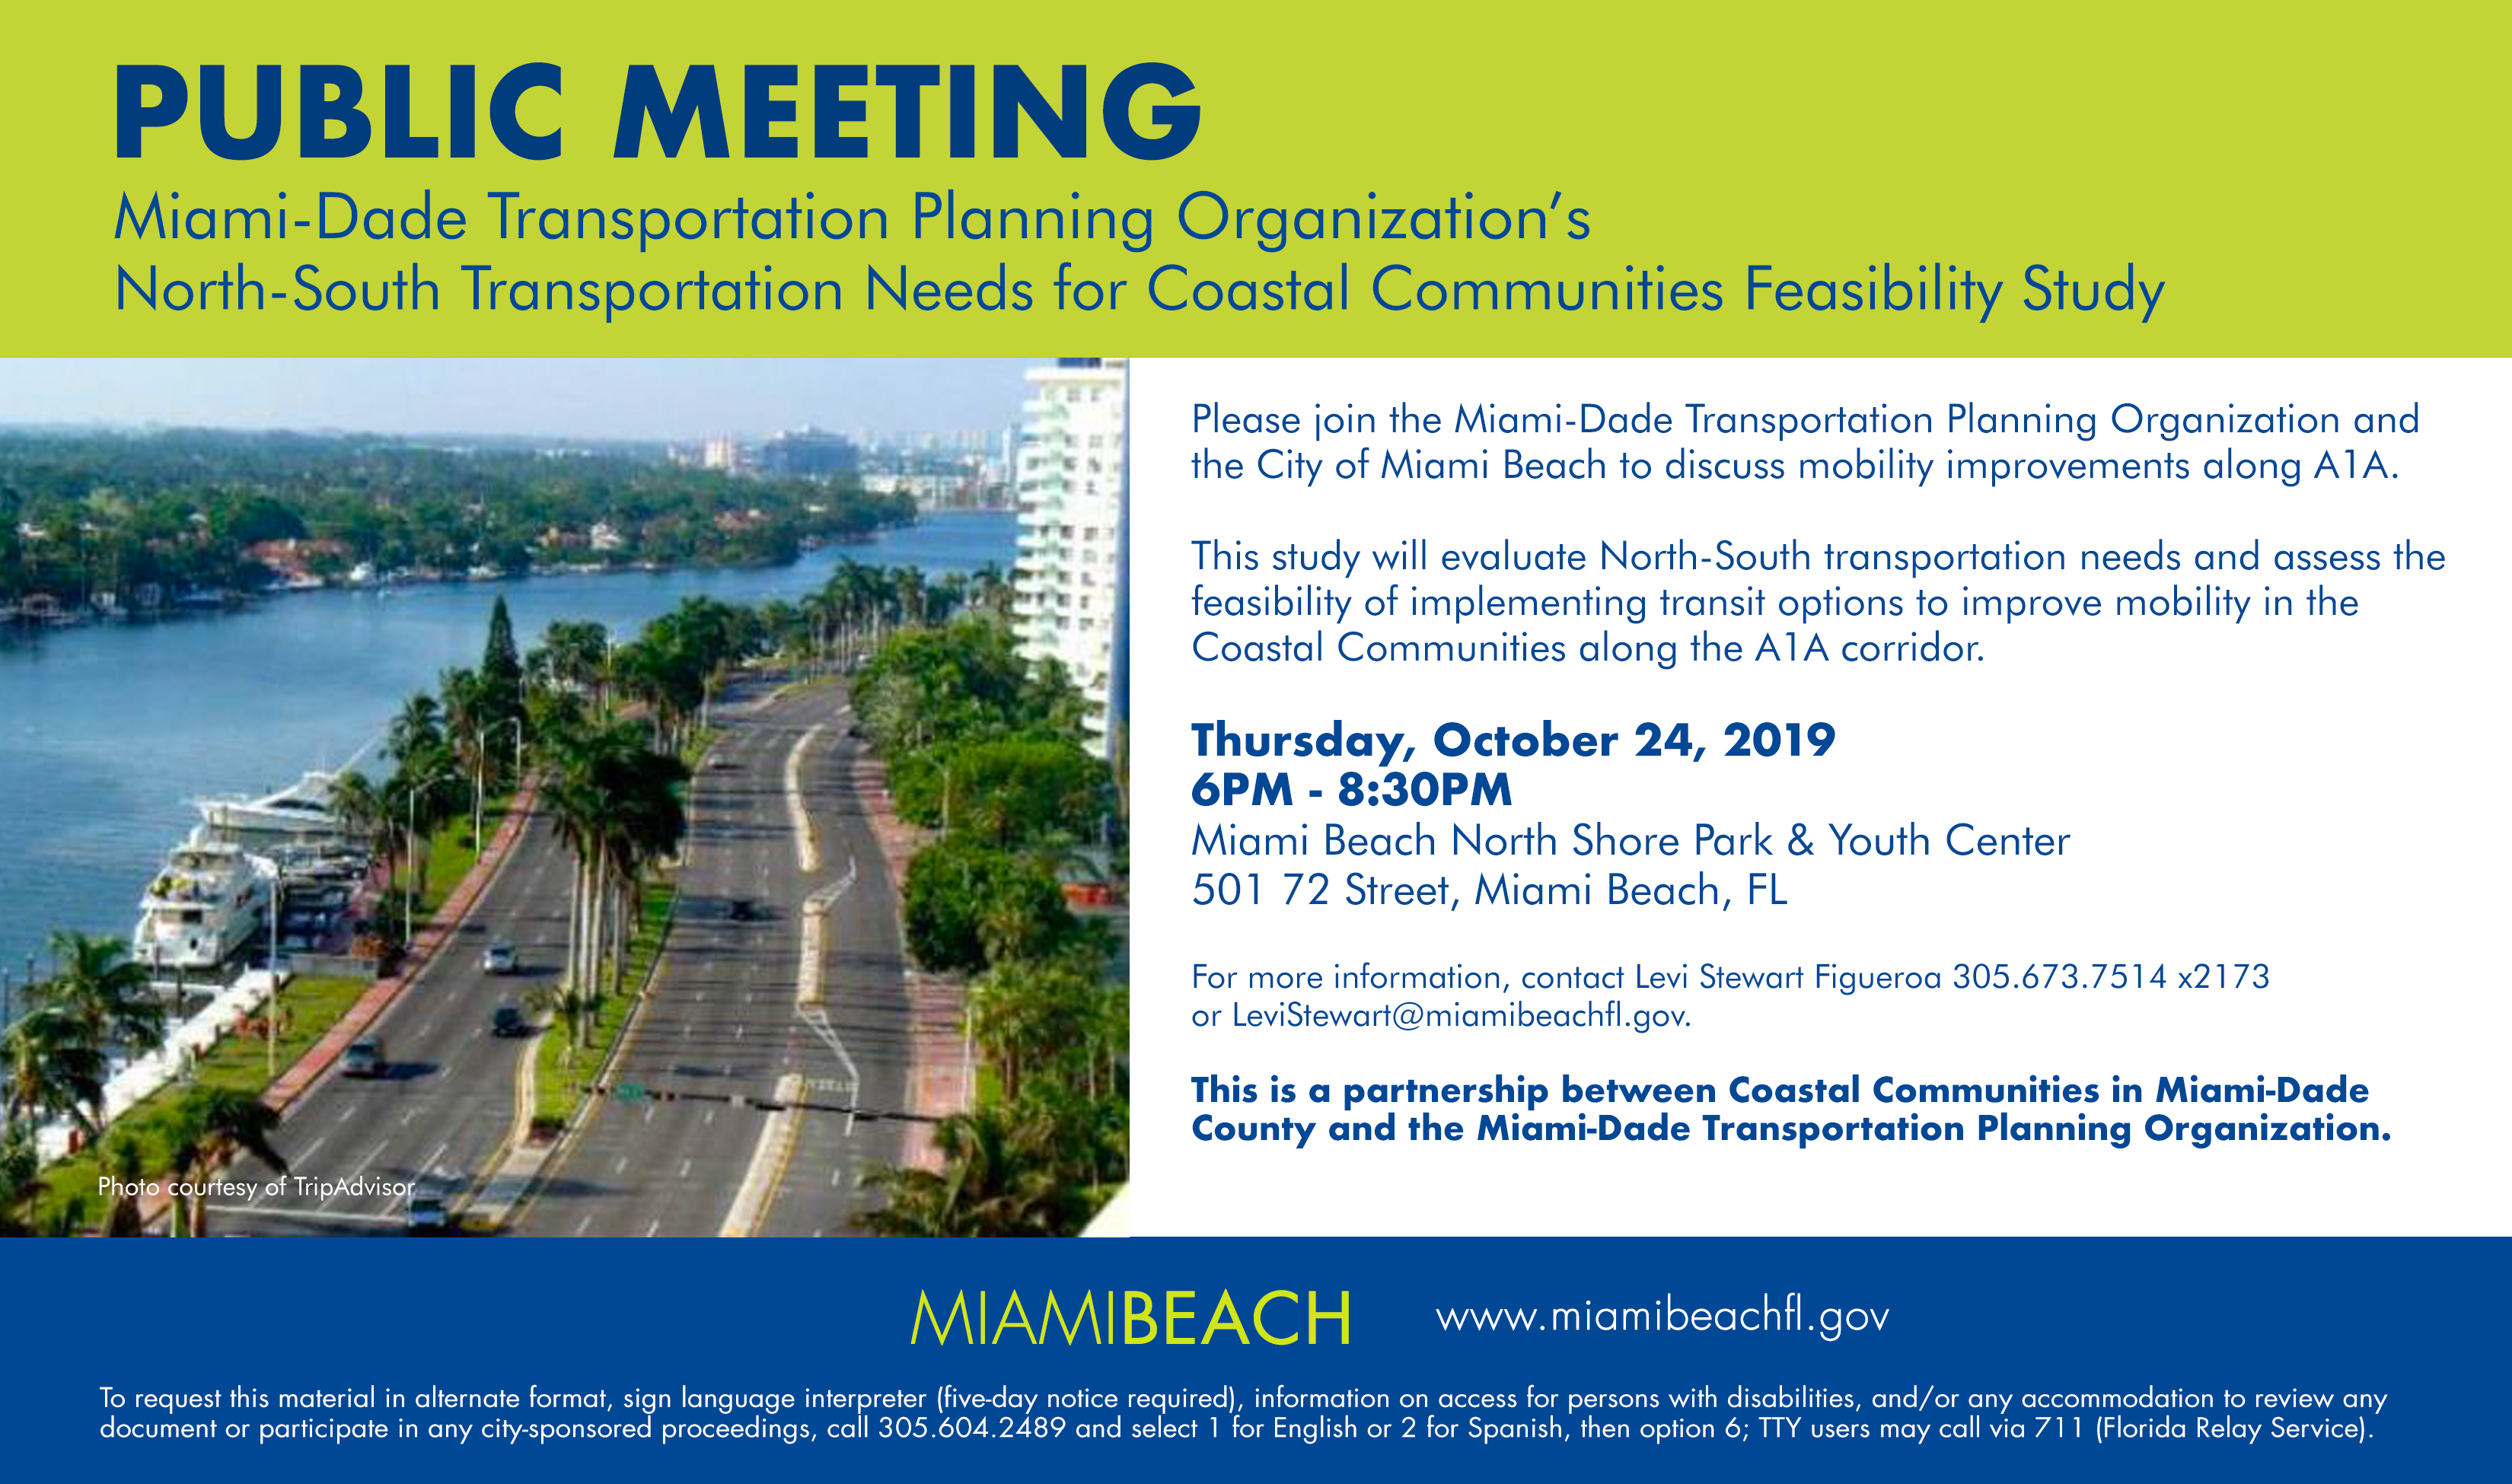 MDTPO’s North-South Transportation Needs for Coastal Communities Feasibility Study